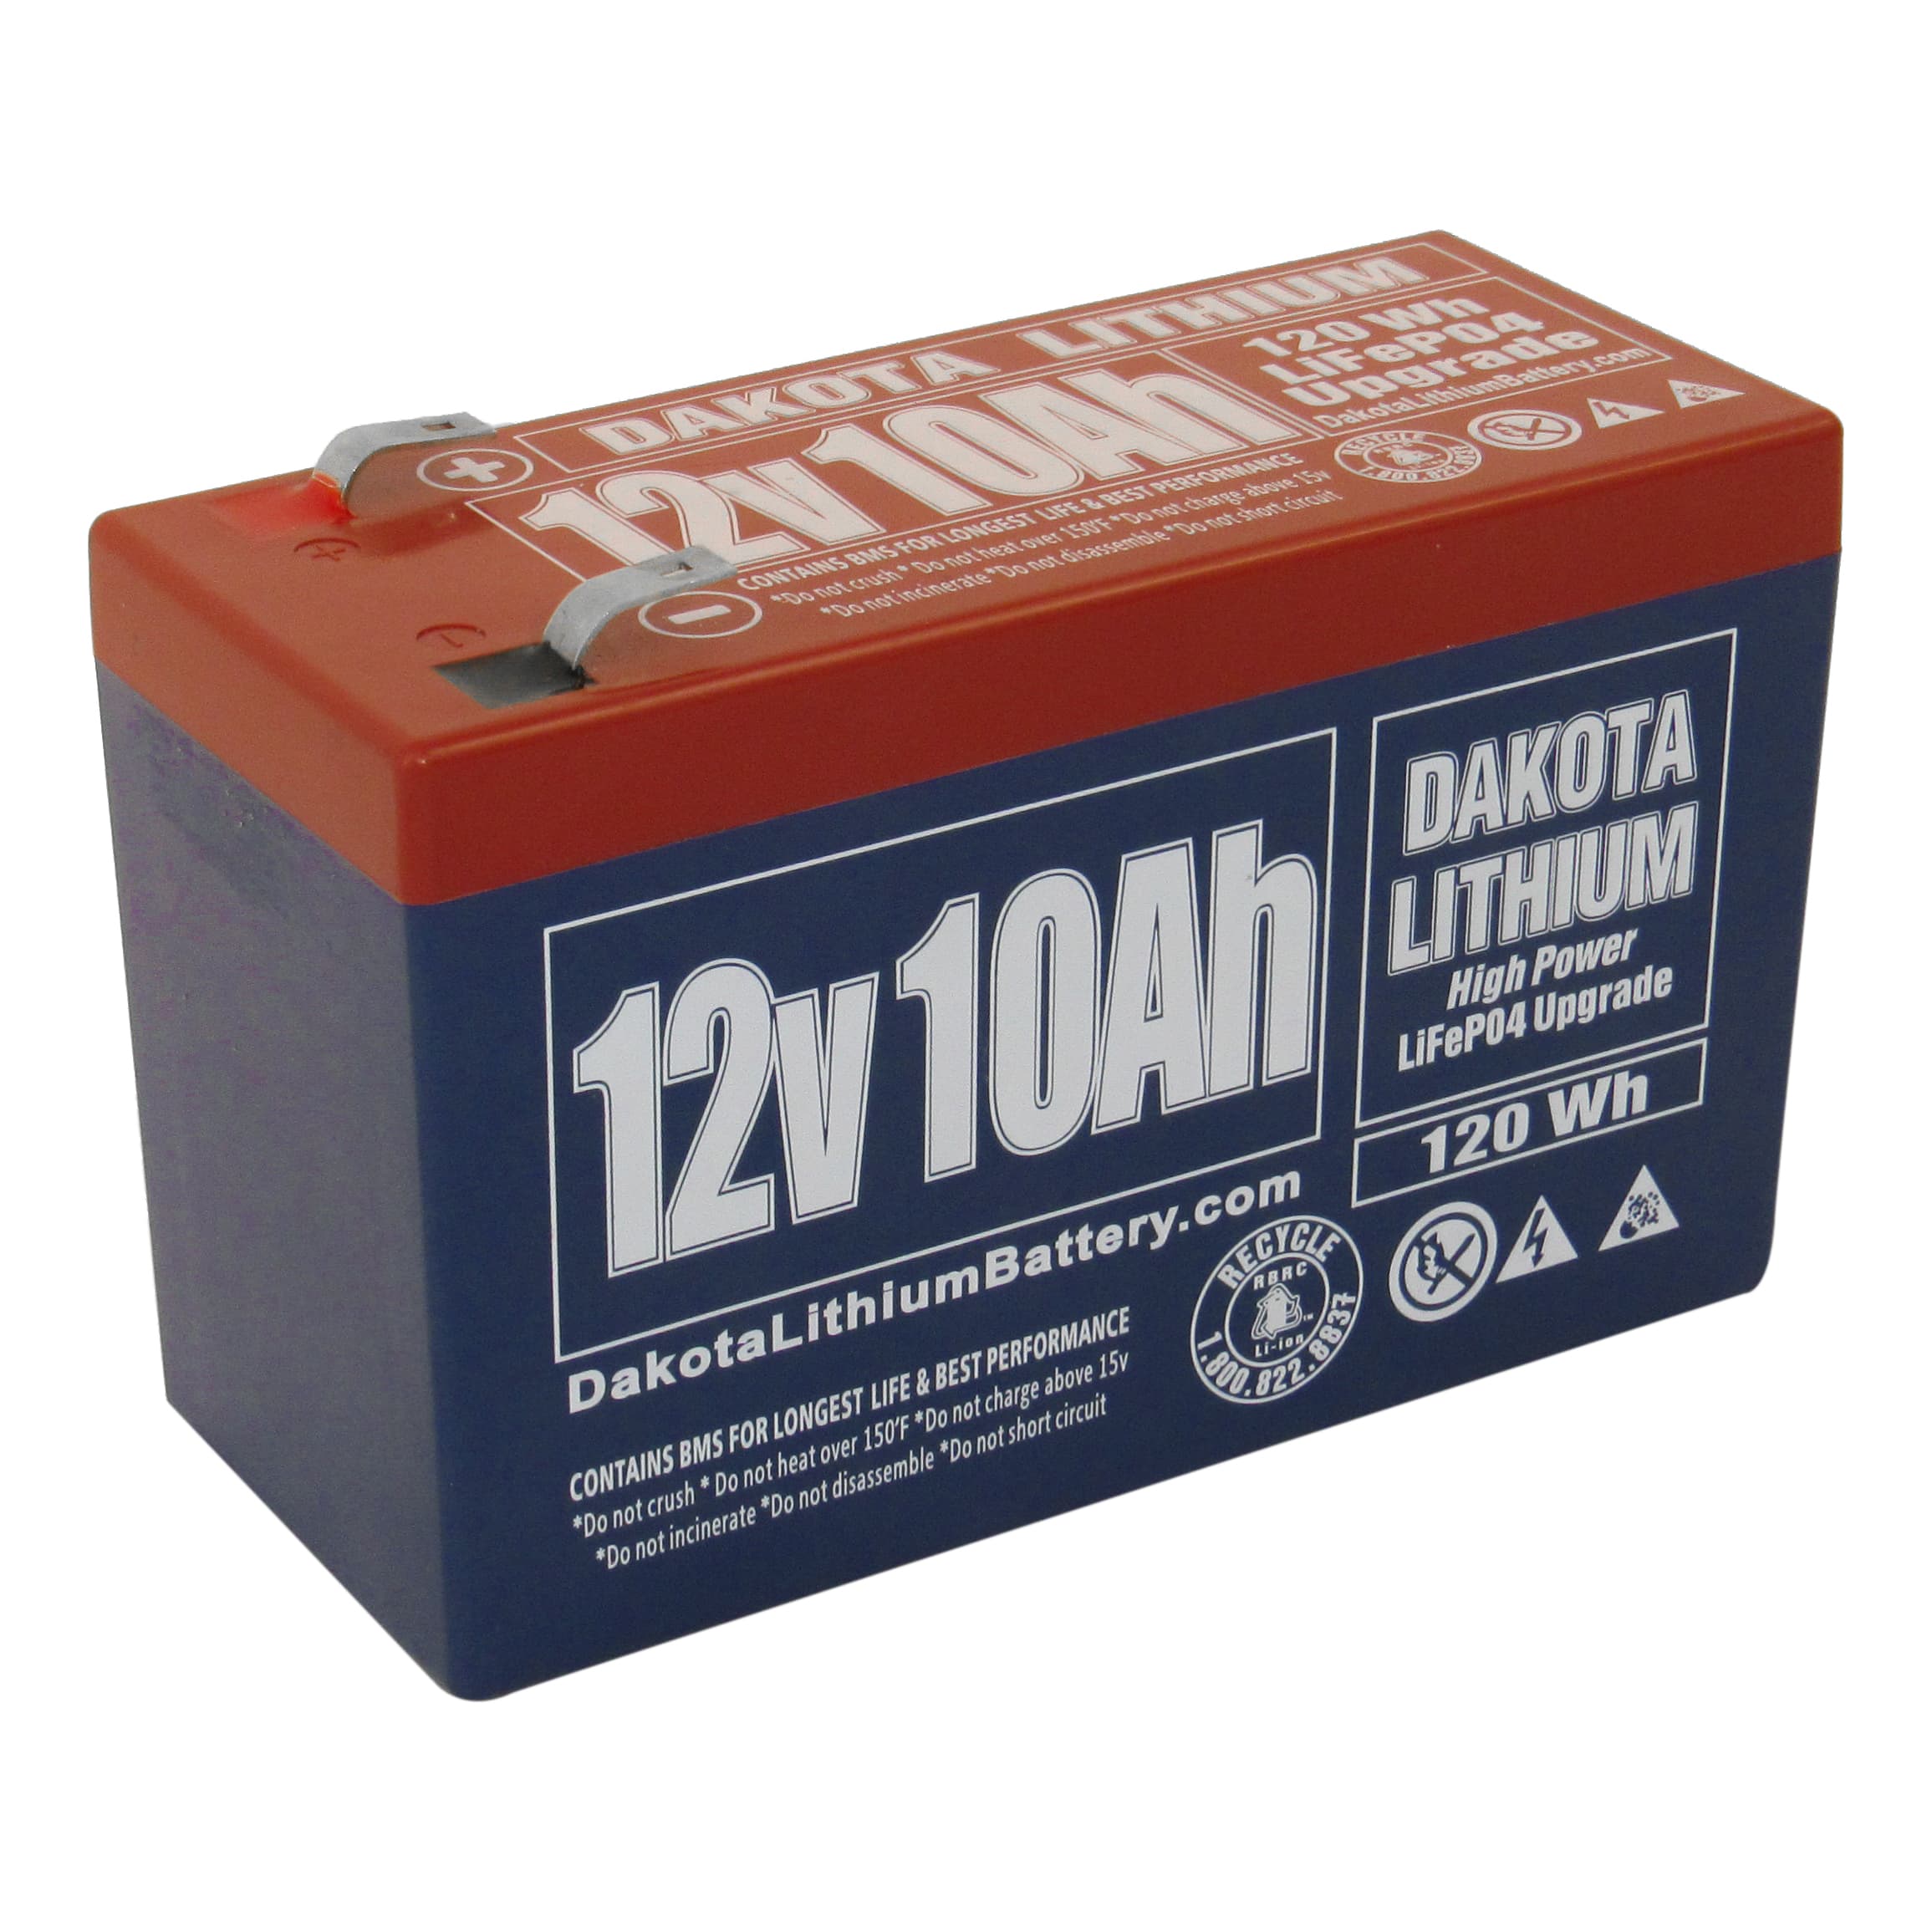 Dakota Lithium 12-Volt 10 AH Battery